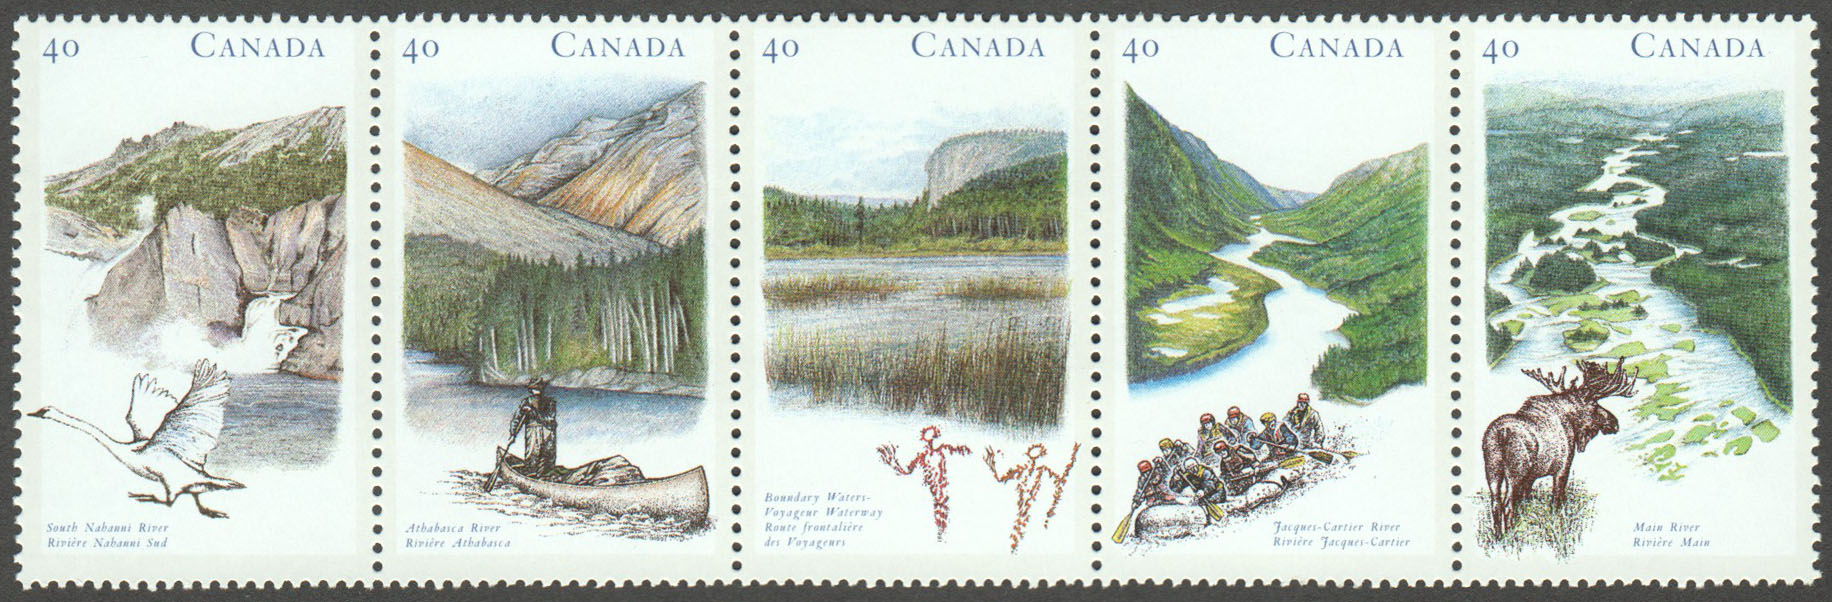 Canada Scott 1325ai MNH (A8-10) - Click Image to Close